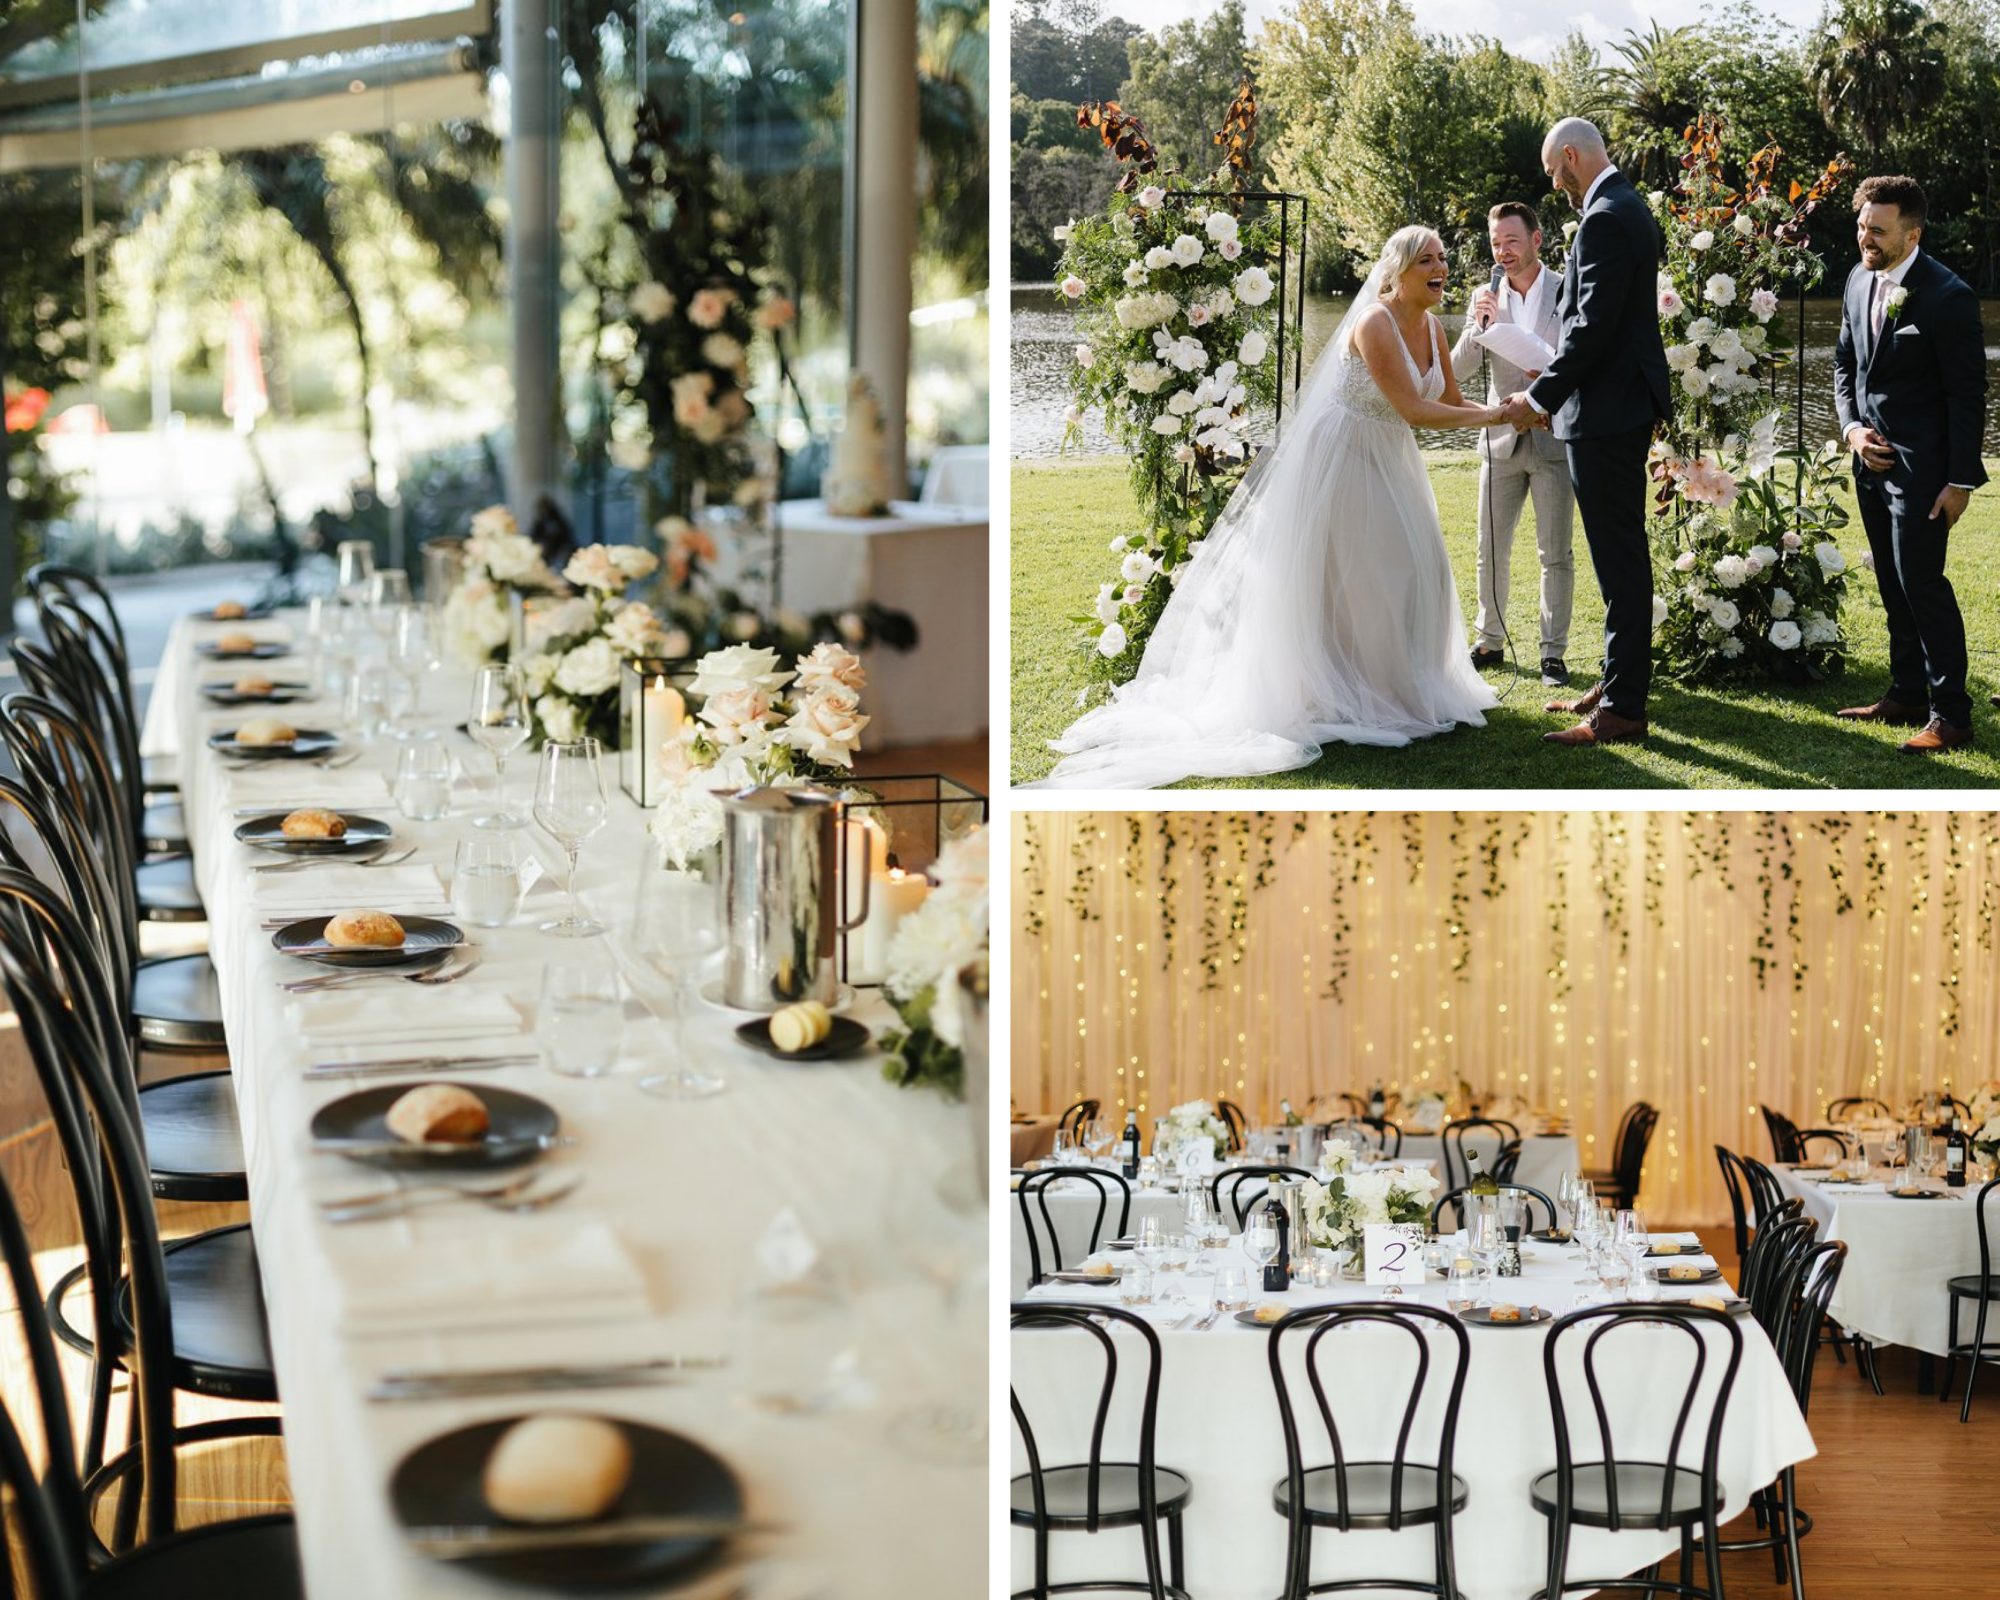 The Terrace Royal Botanic Gardens Melbourne wedding venue